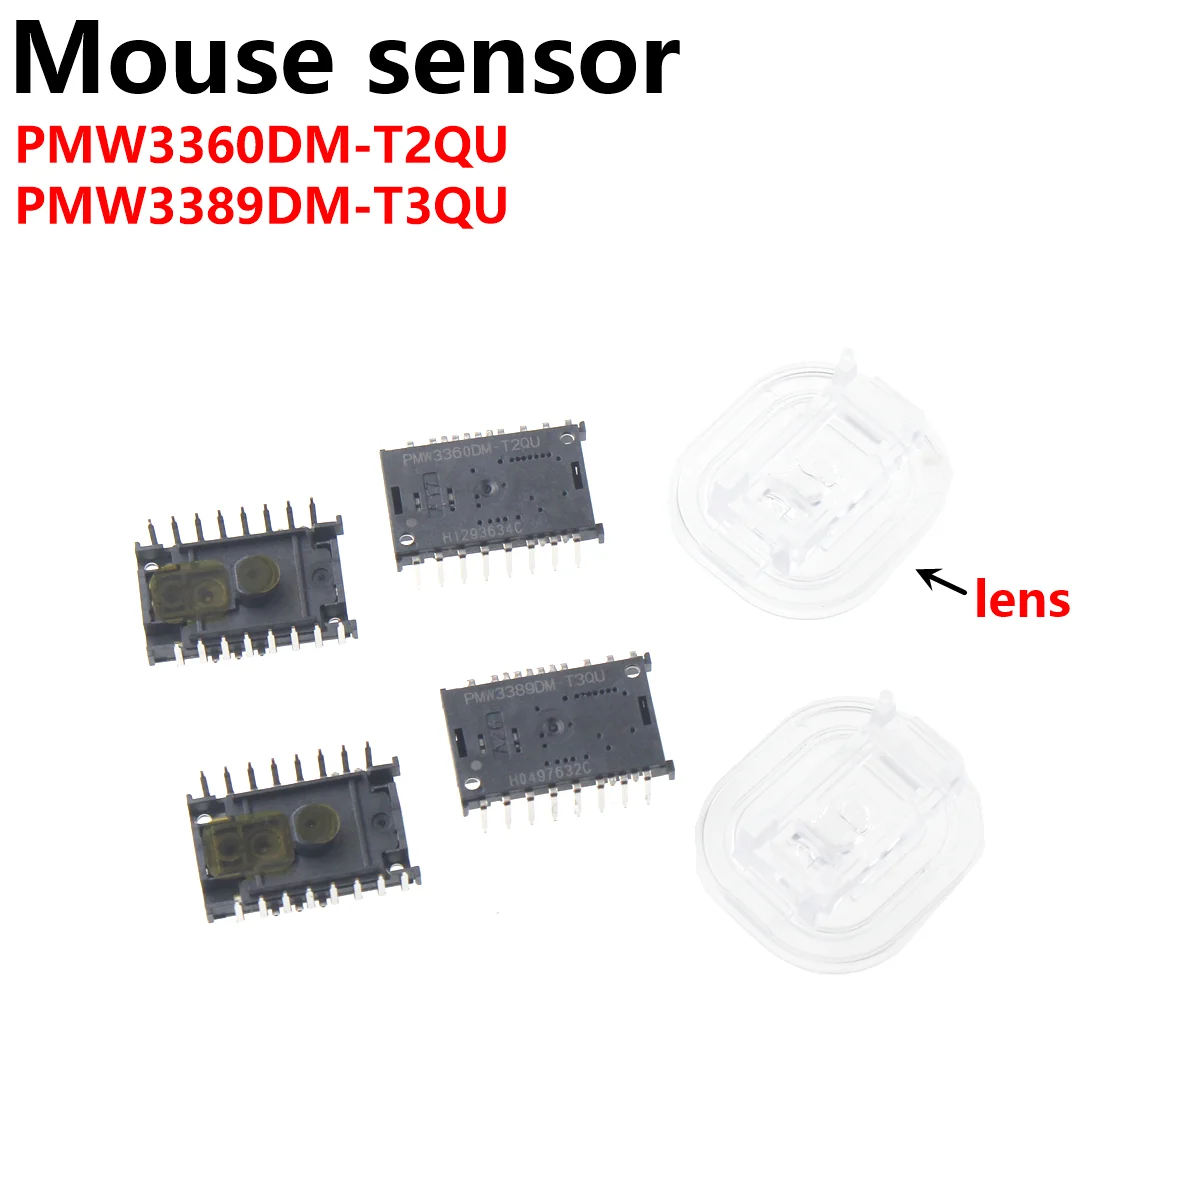 PMW3360DM-T2QU + LM19-LSI DIP PMW3360 PMW3360DM PMW3389DM sensor with lens LM19 100% NEW&ORIGINAL FREE SHIPPING